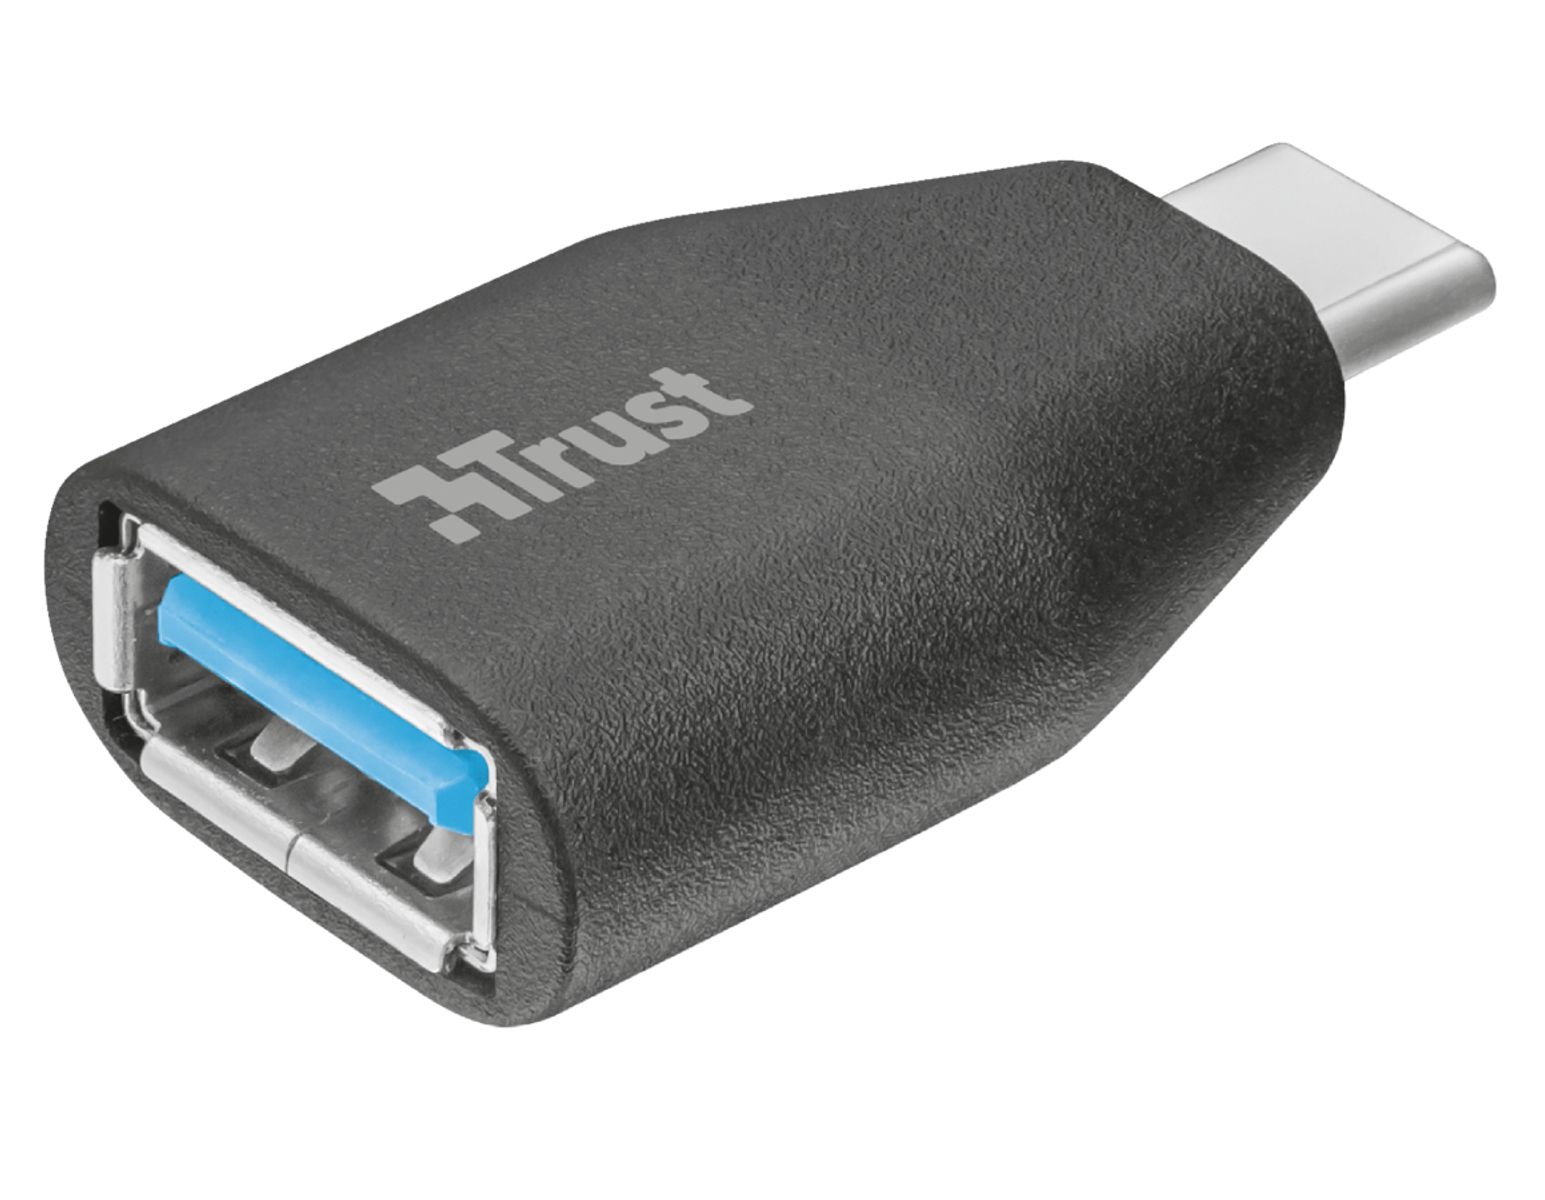 Video USB ADAPTER, TO USB-C 3.1 Schwarz + Adapter, Data TRUST 22627